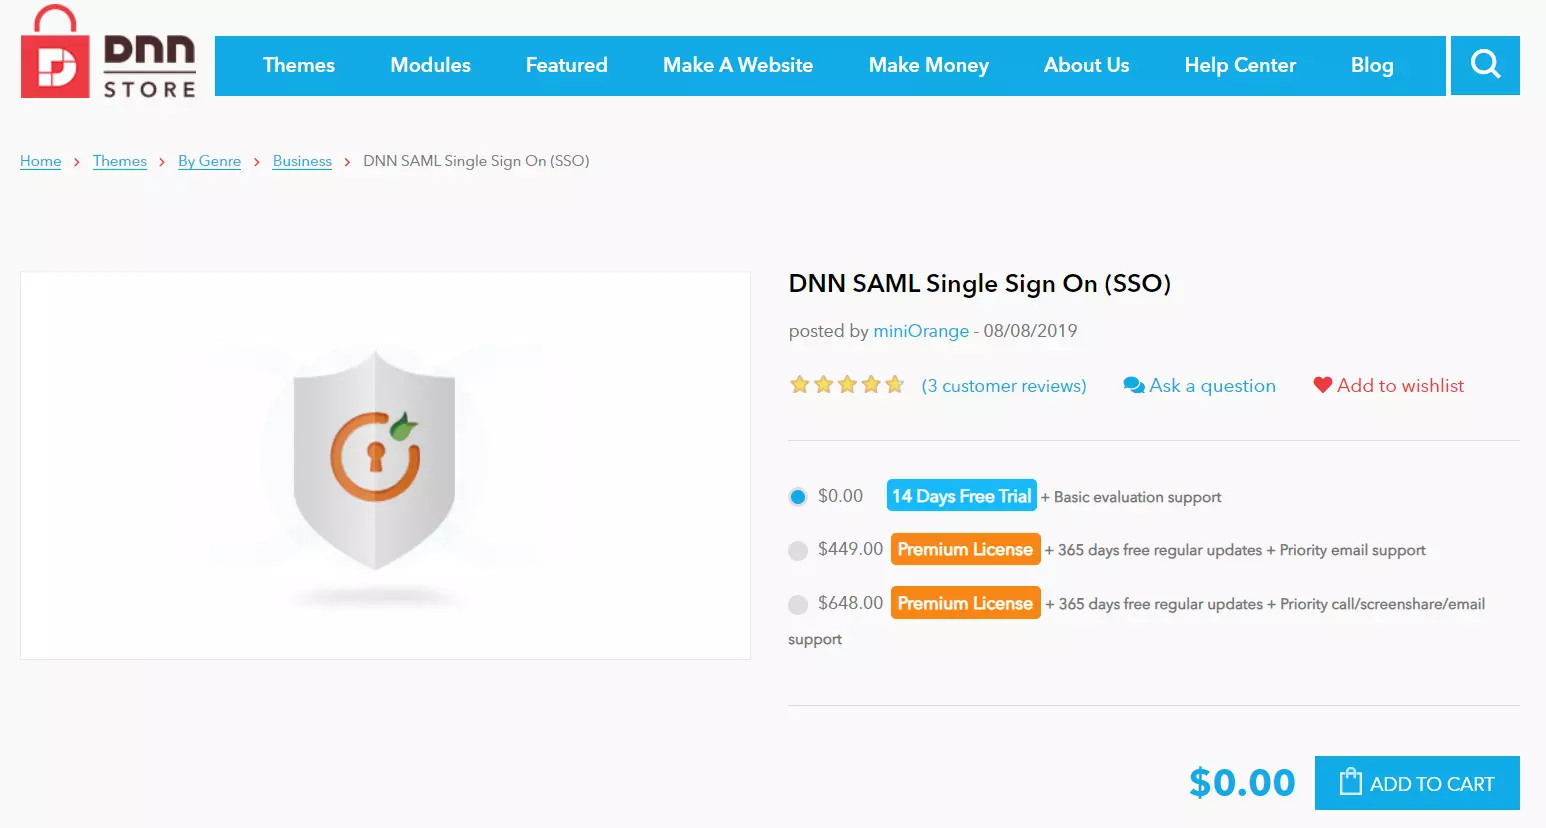 DNN SAML Single Sign-On (SSO) - DNN SAML SSO - Download miniOrange DNN SAML SSO from DNN Store